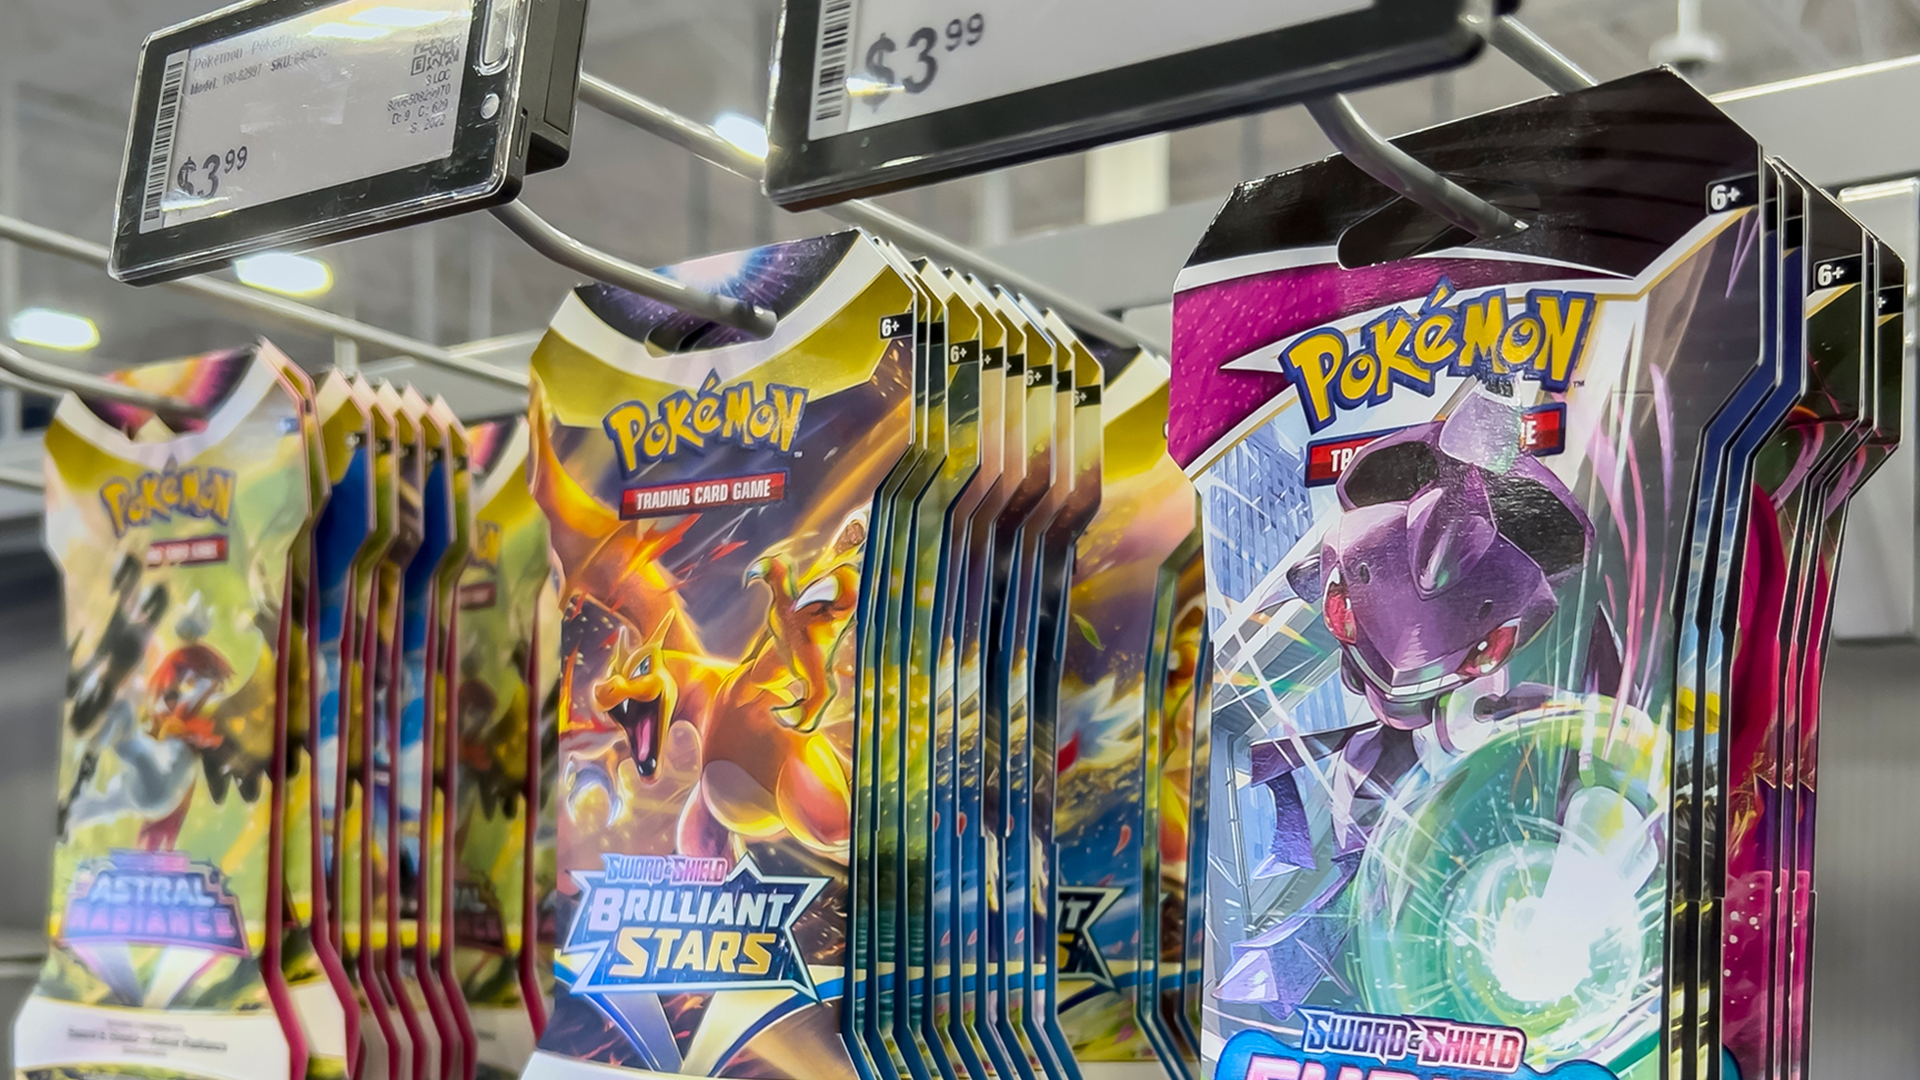 Pokemon cards hanging in a Best Buy store shelf